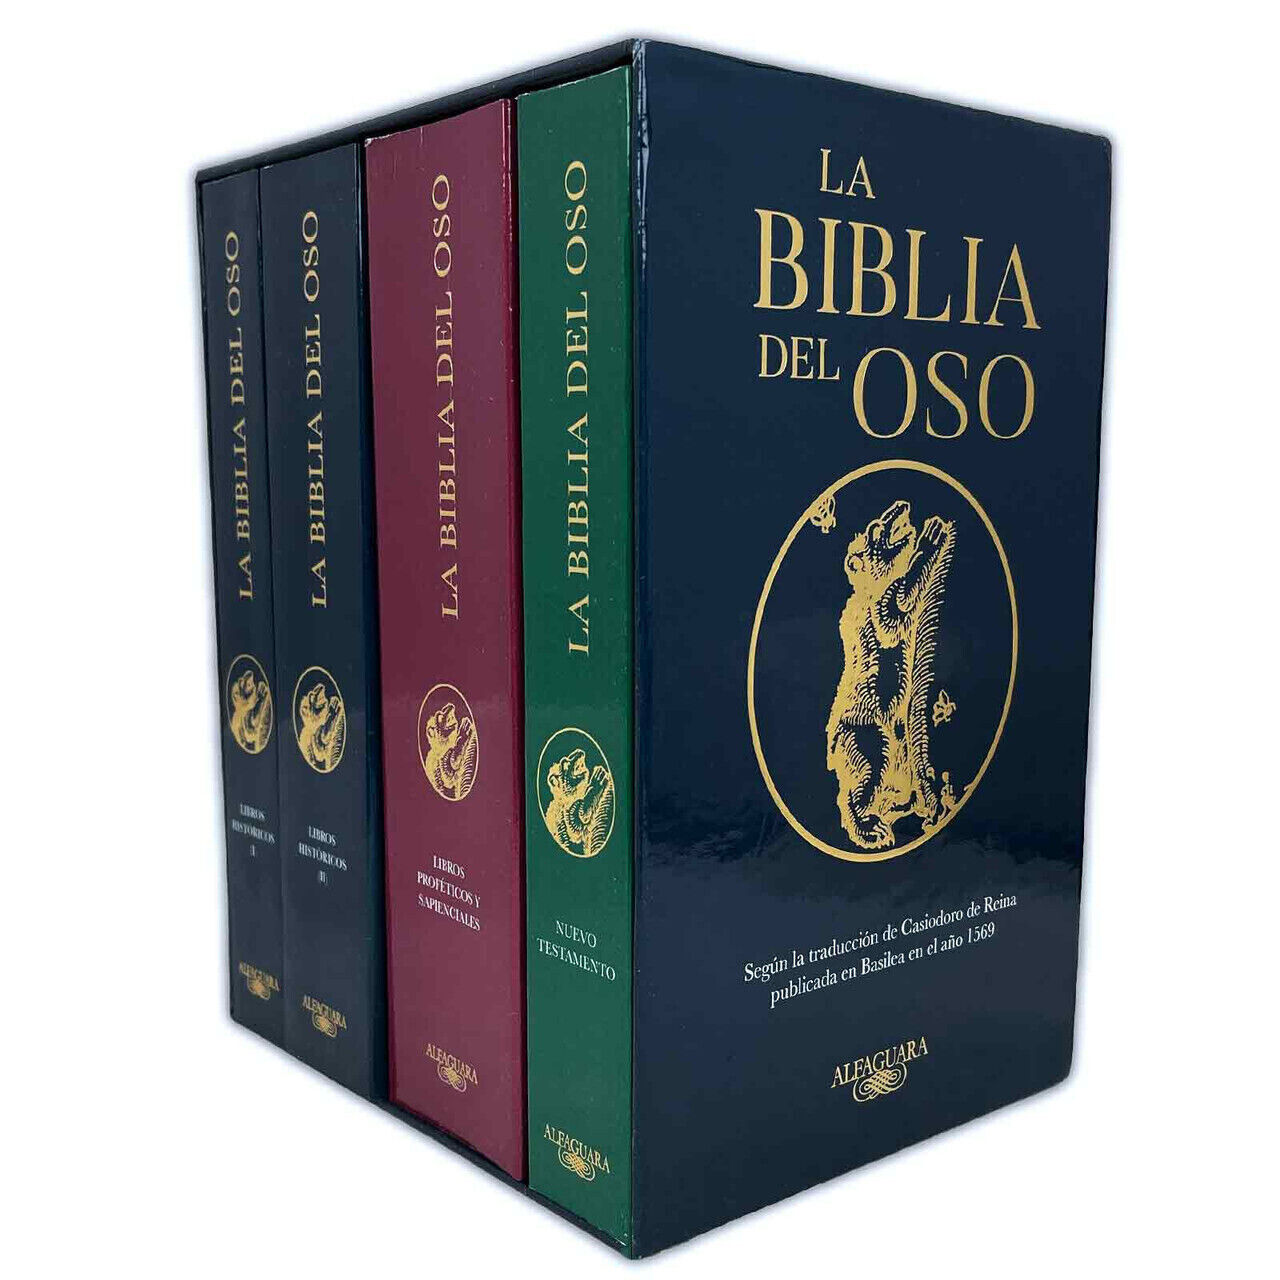 Estuche de la Biblia del oso (4 tomos)